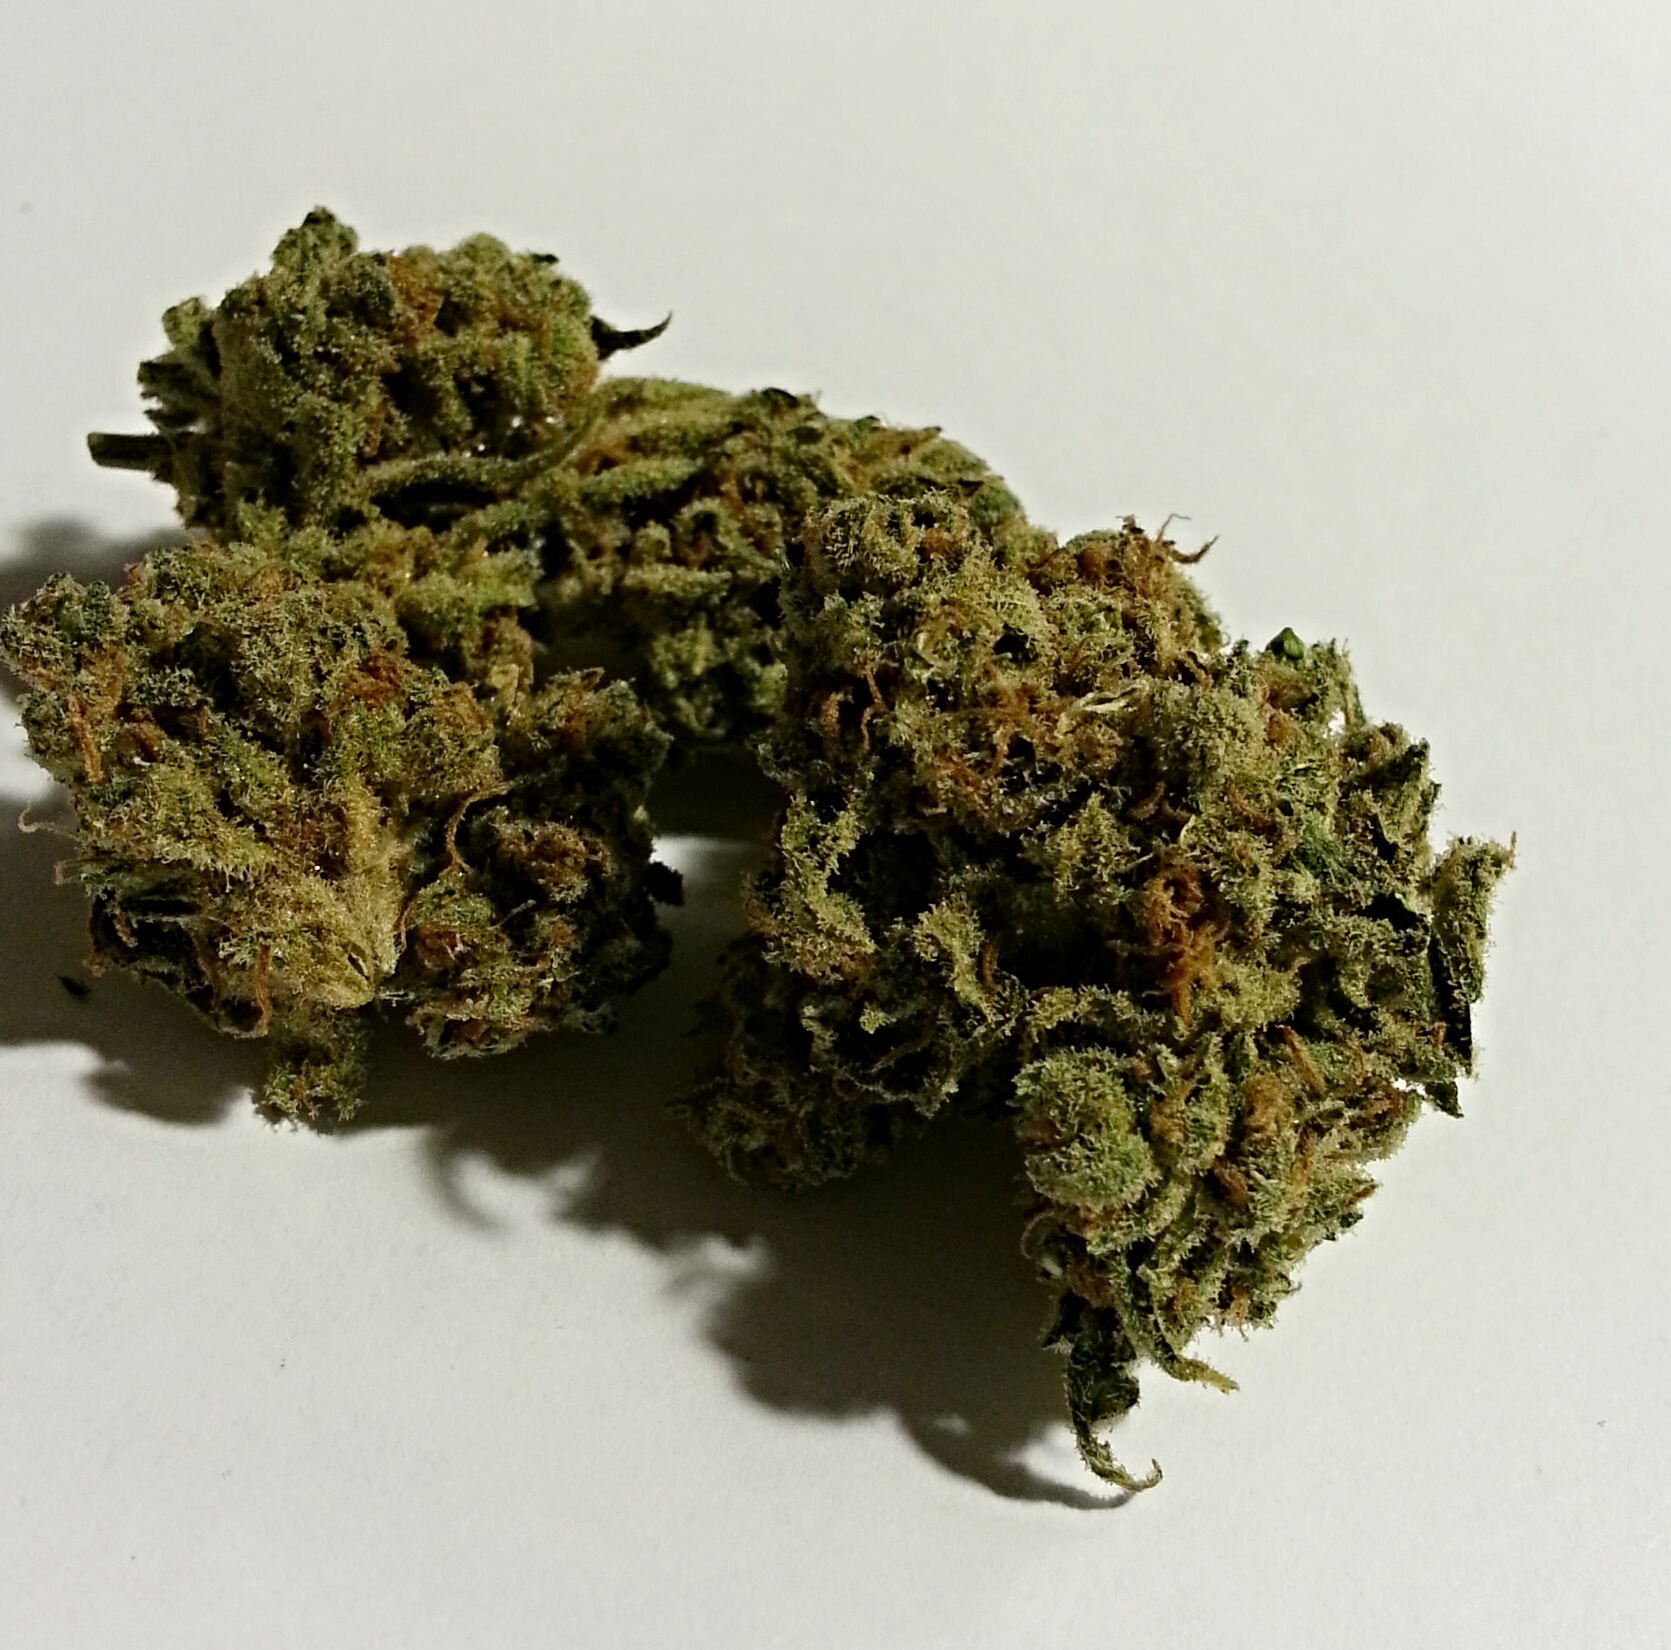 Super J1 from OCPC Medical Marijuana Review